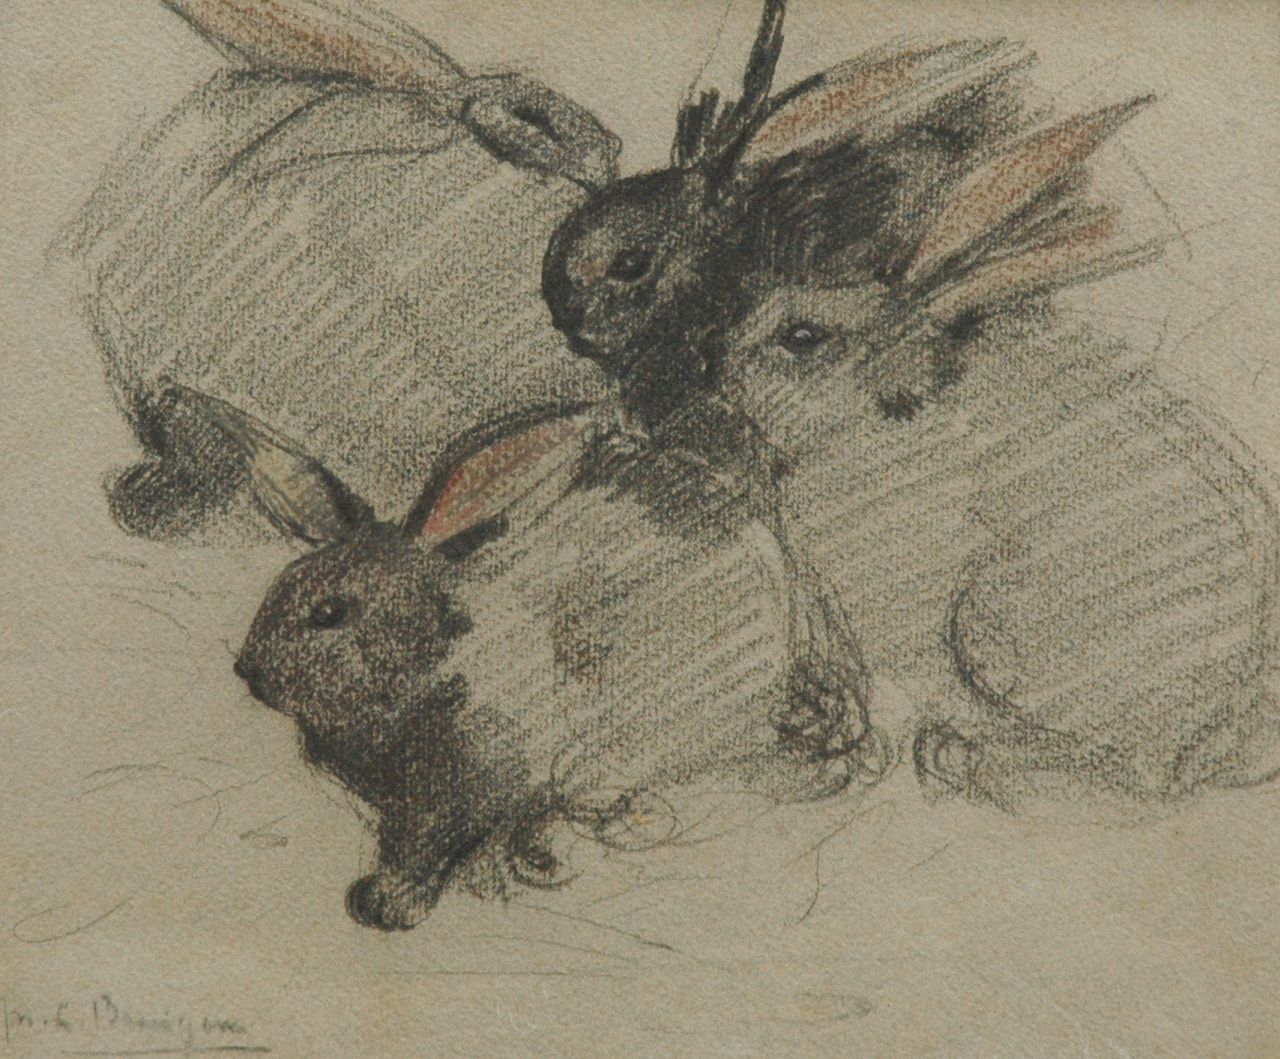 Bruigom M.C.  | Margaretha Cornelia 'Greta' Bruigom, Vier konijnen, krijt op papier 24,1 x 29,0 cm, gesigneerd linksonder